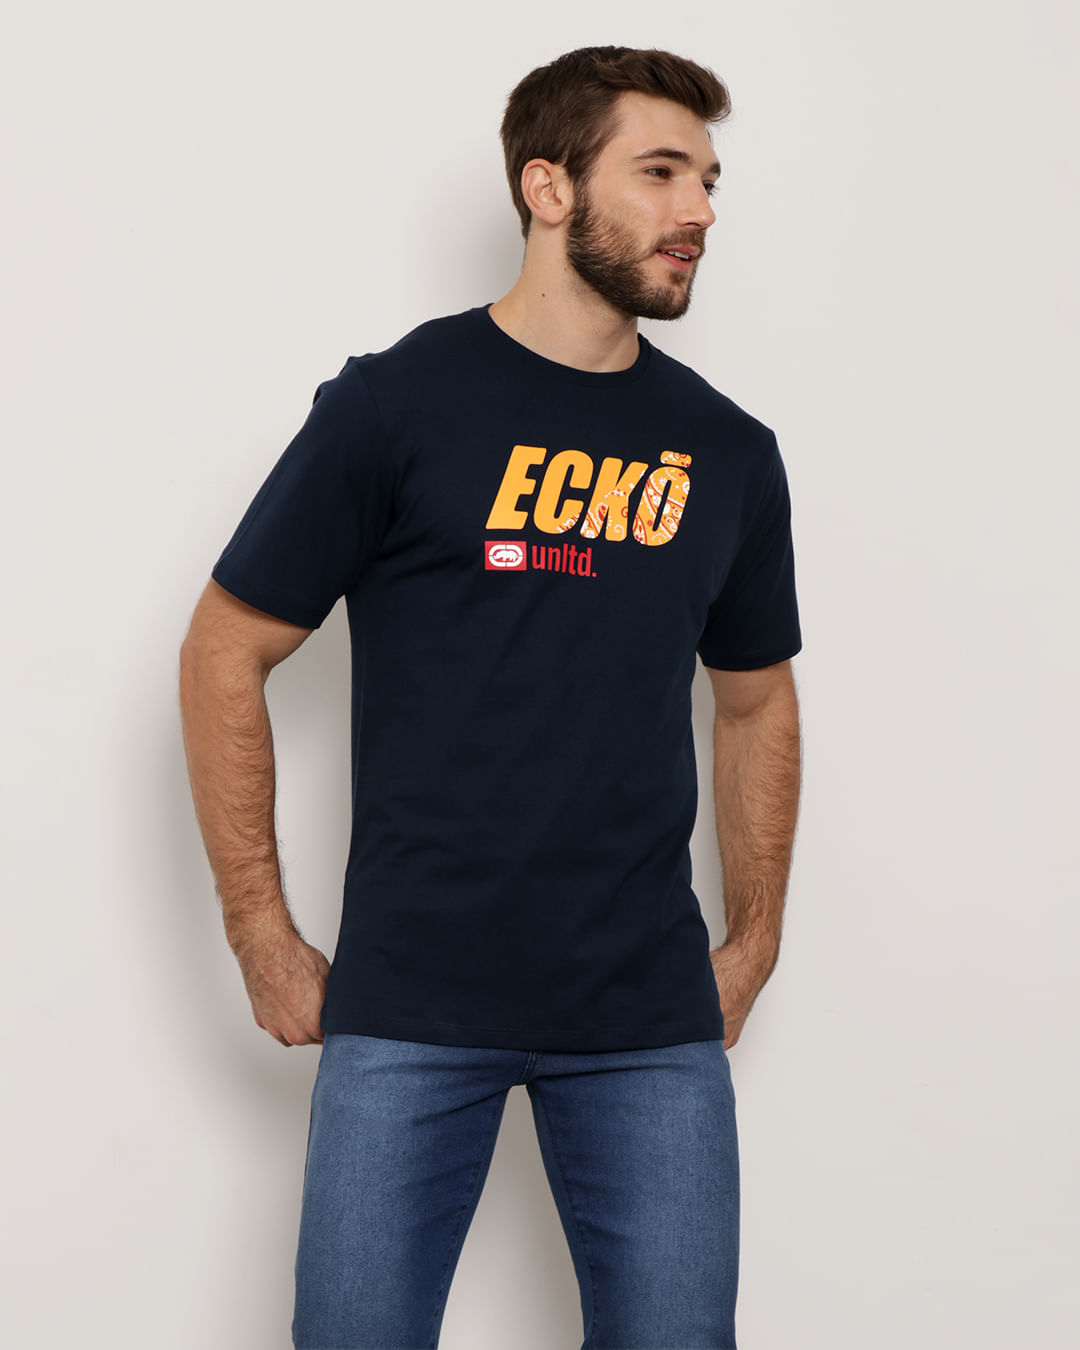 Camiseta-Masculina-Ecko-unlimited-Estampa-Marinho